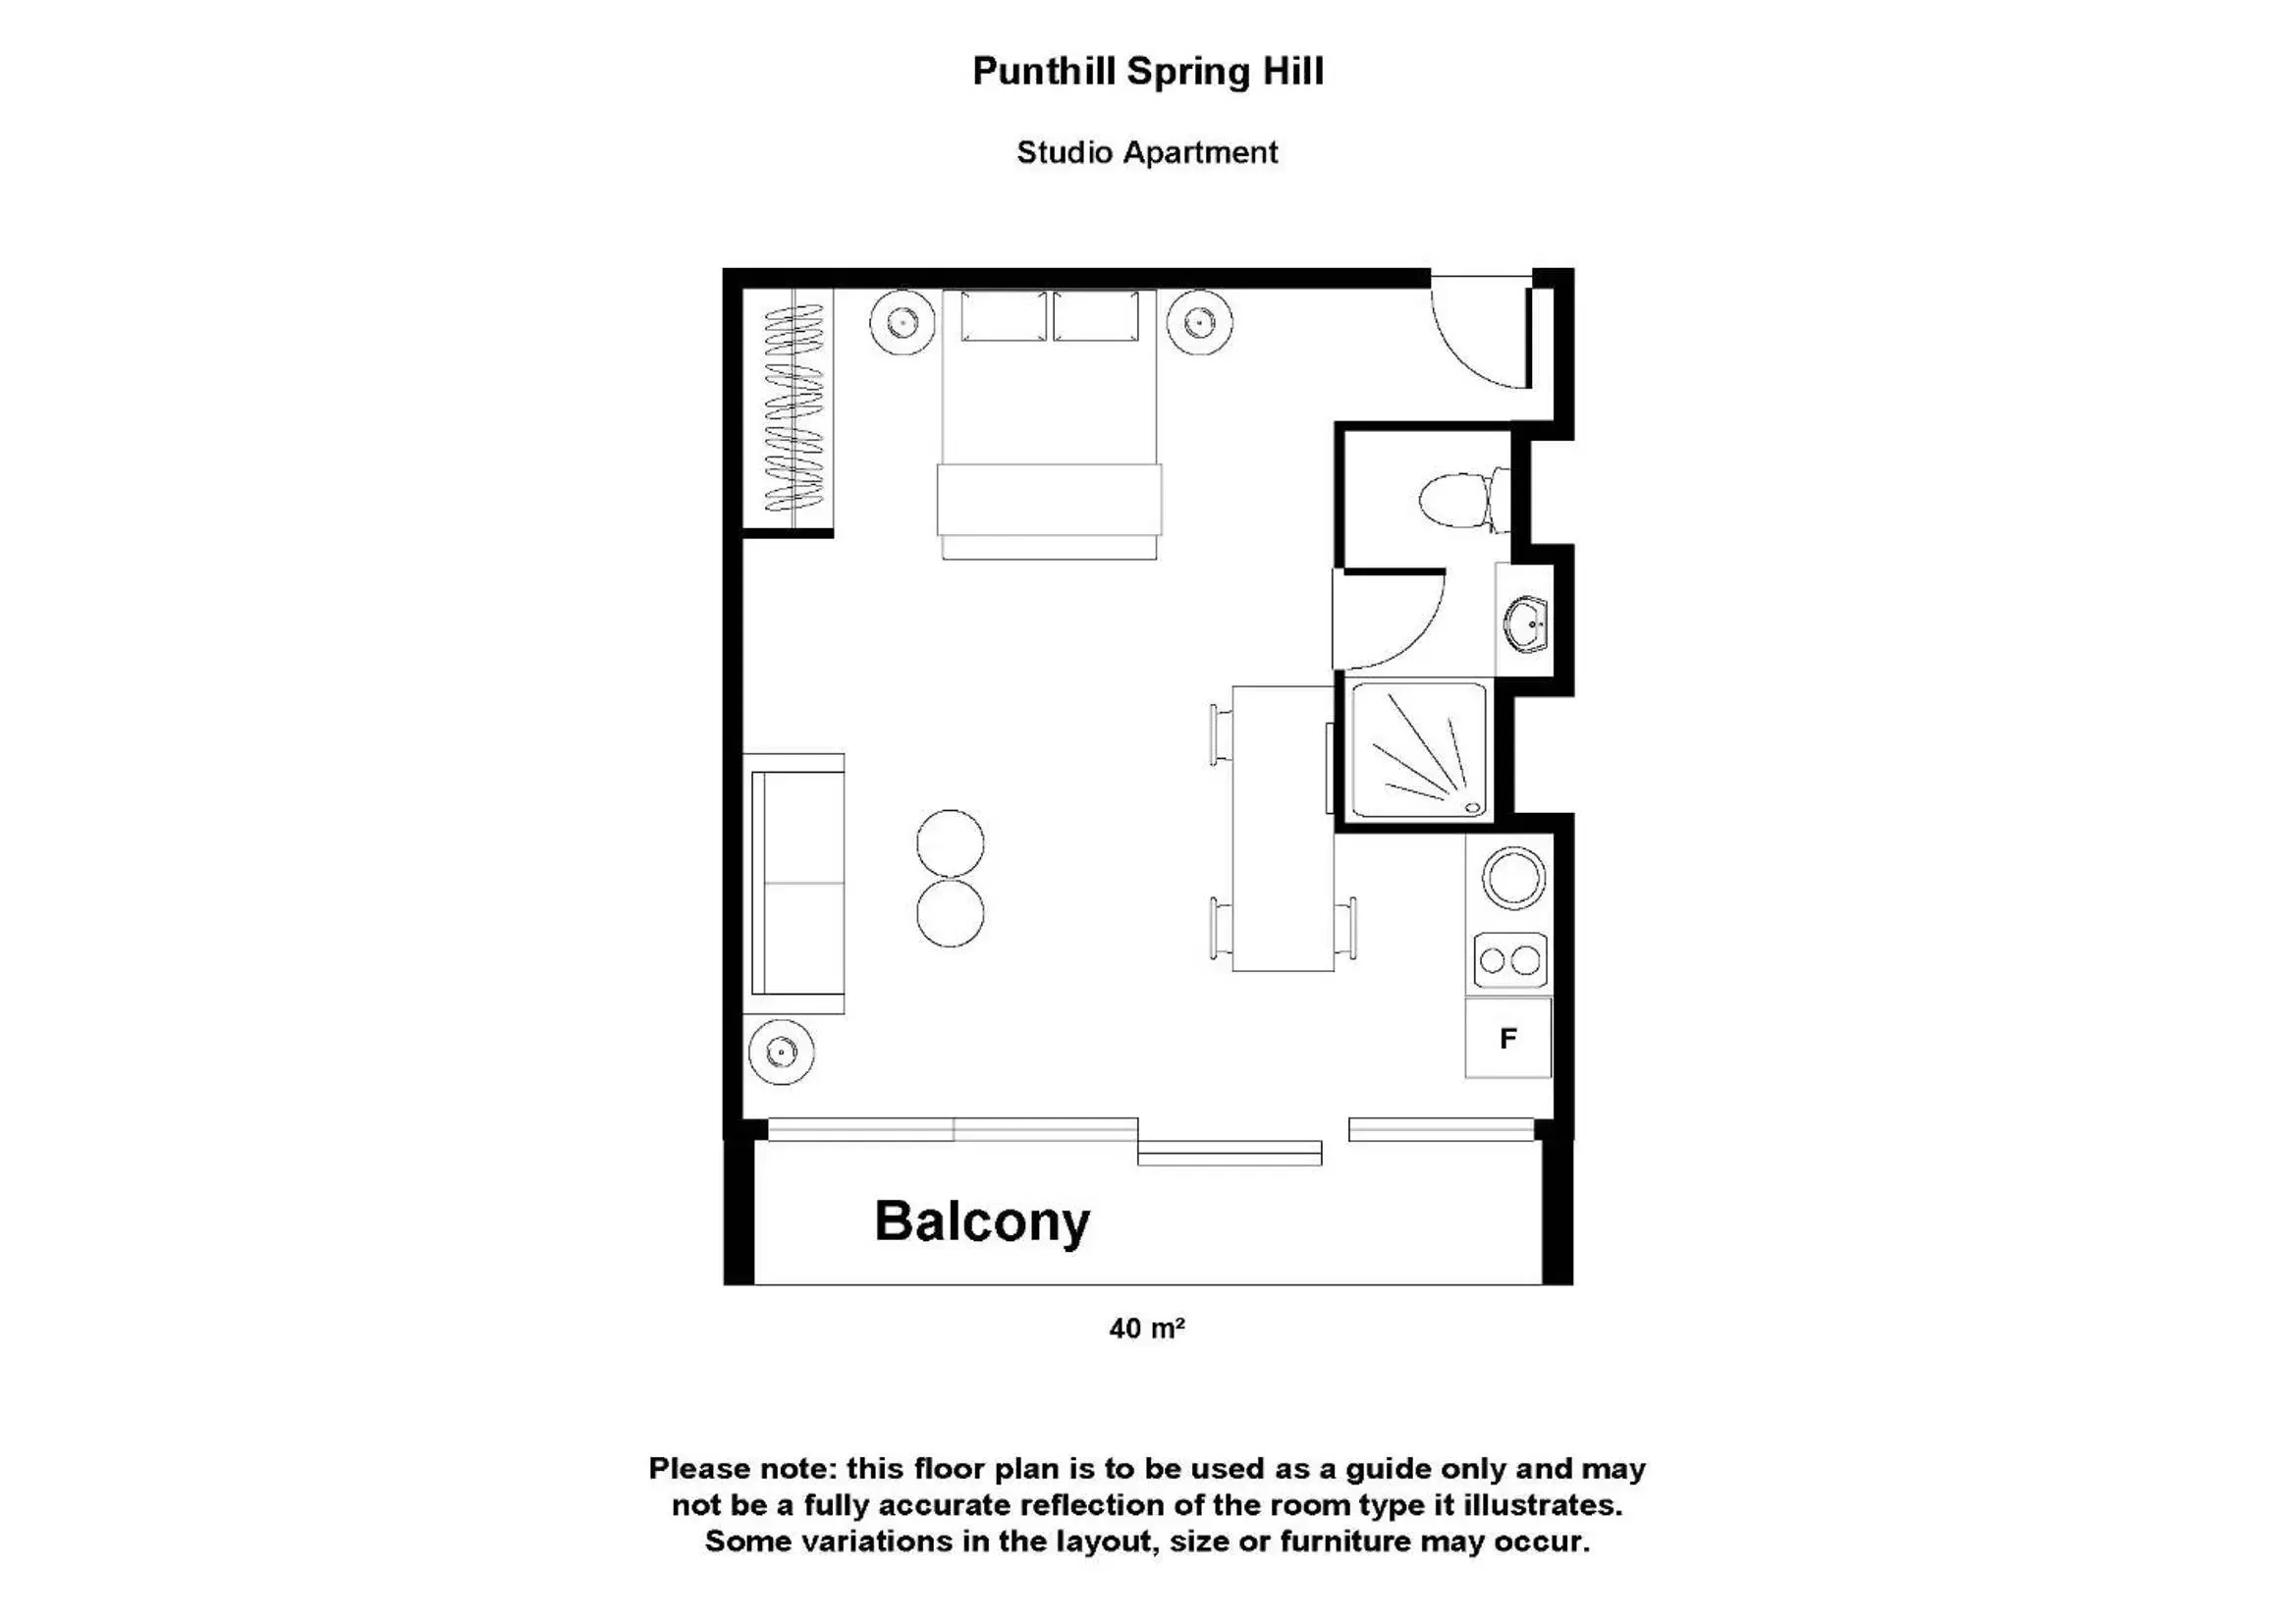 Floor Plan in Punthill Spring Hill